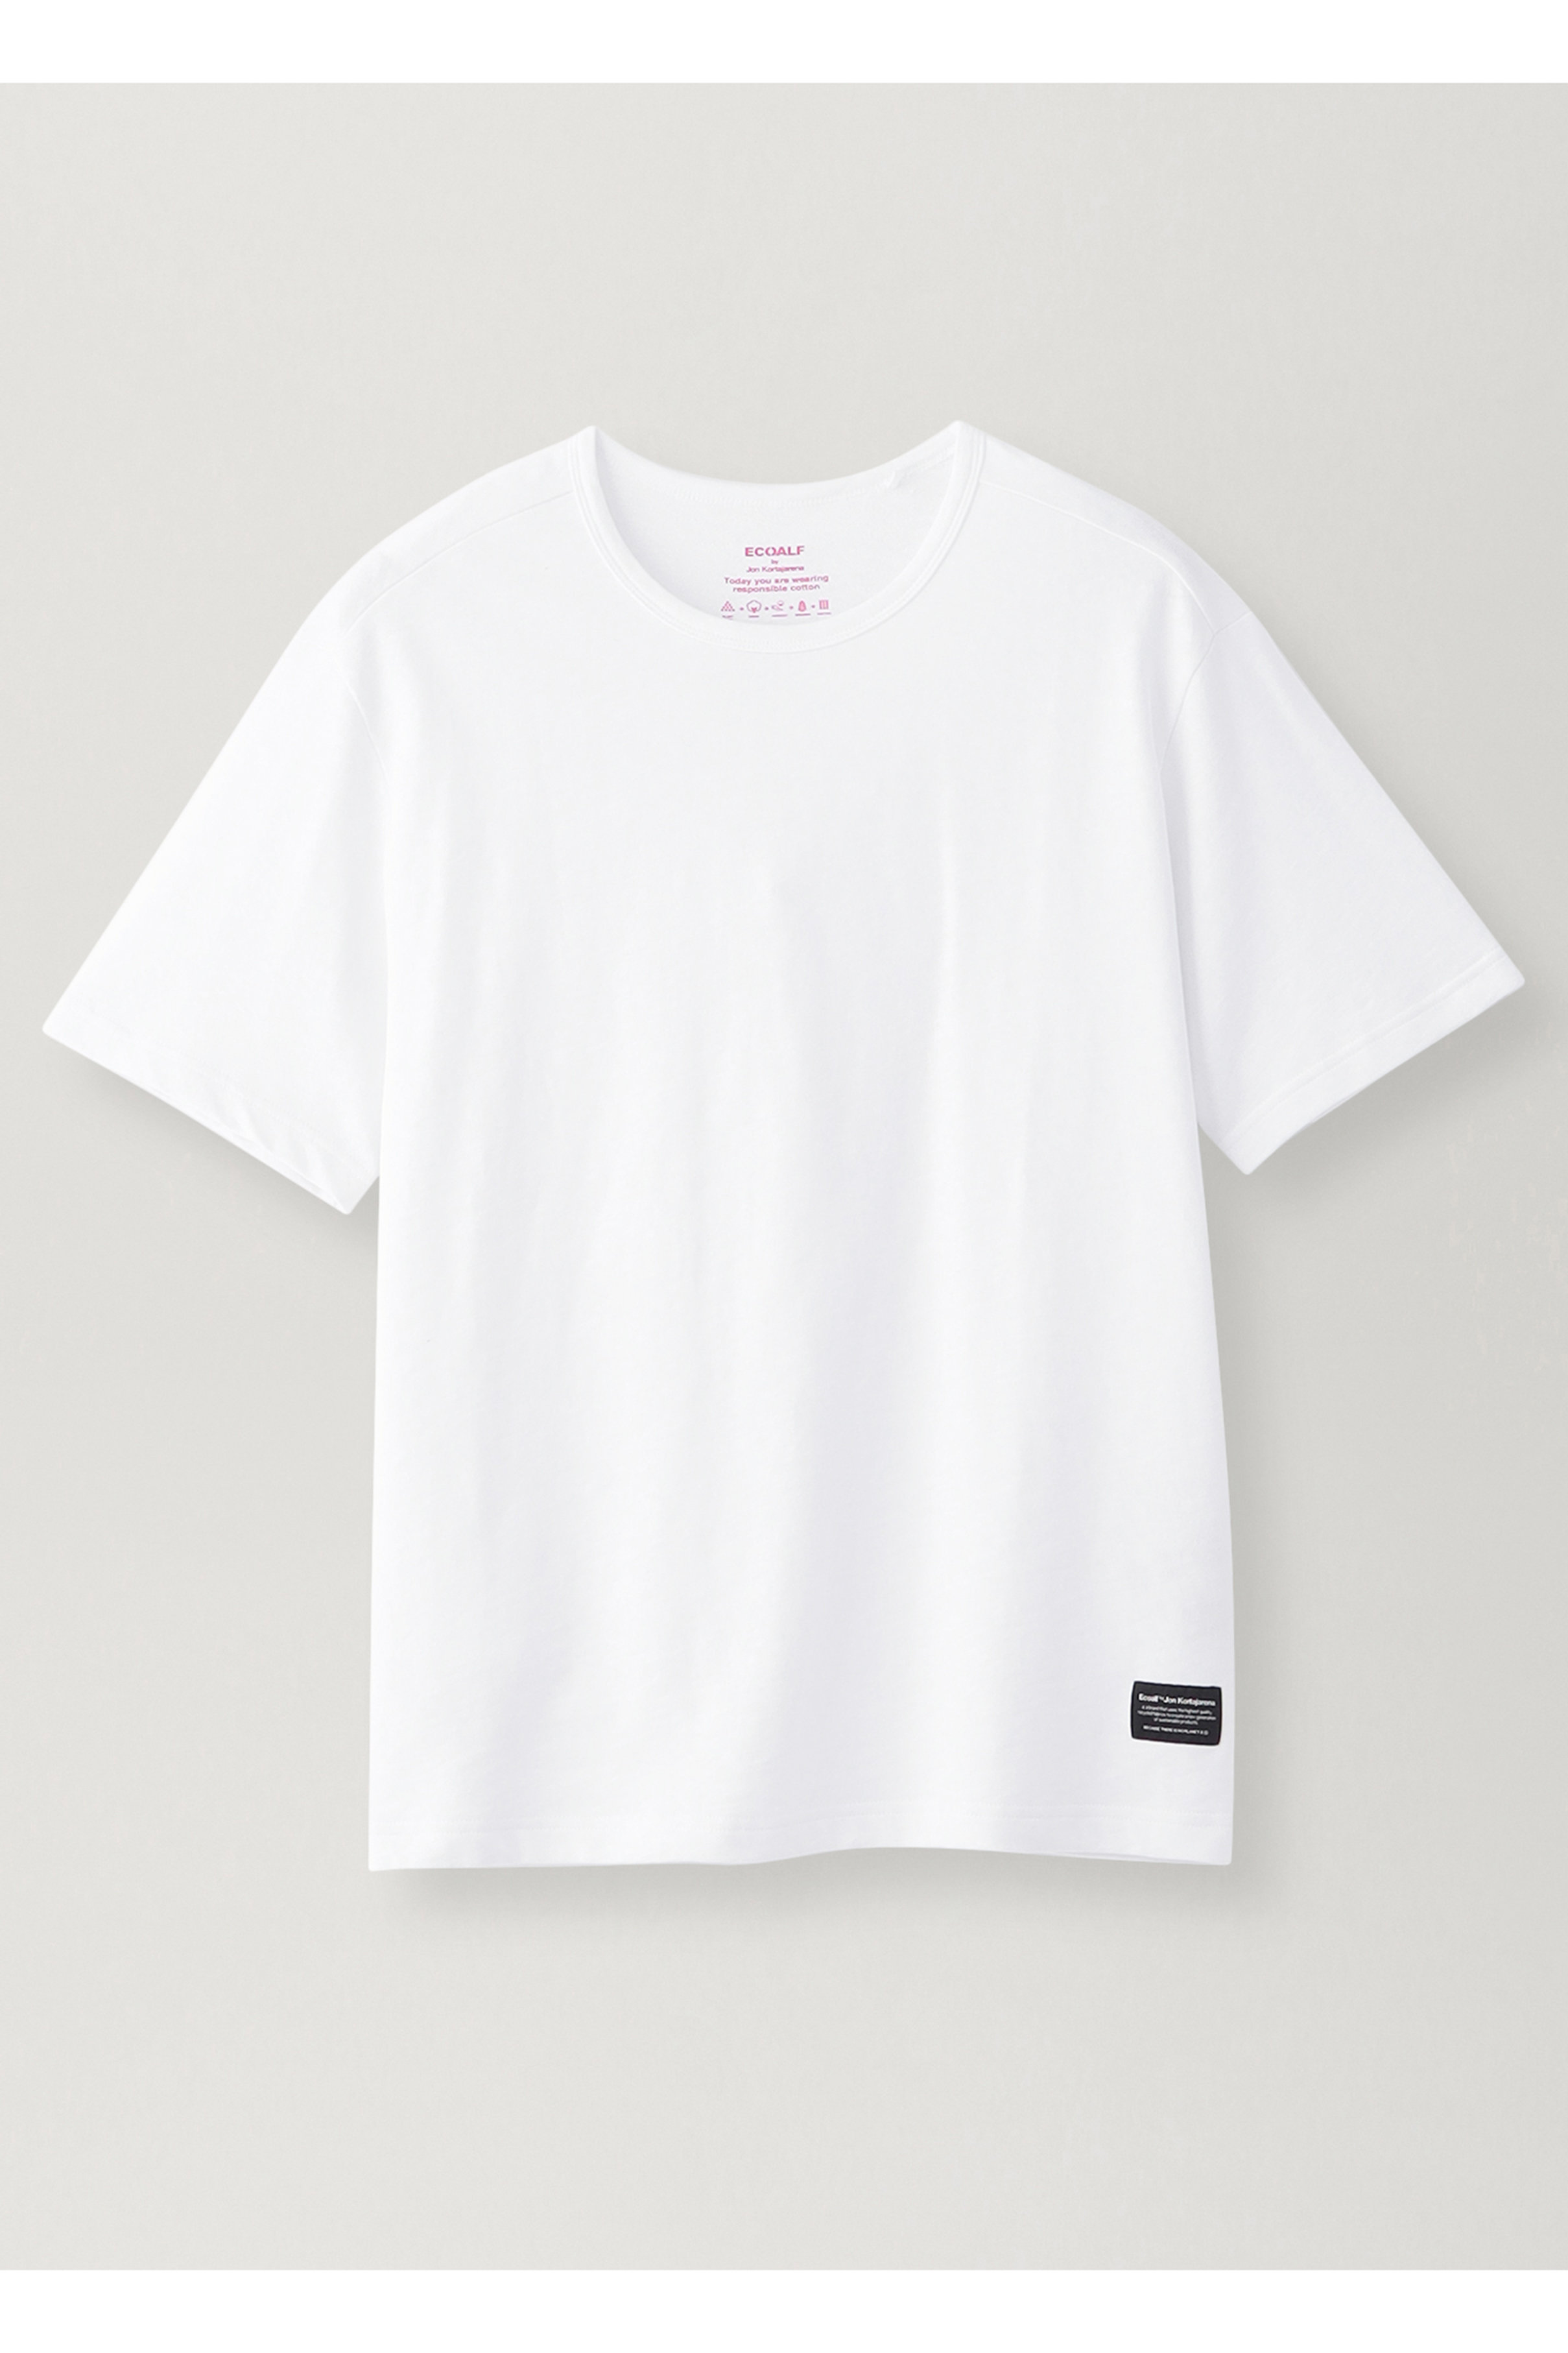 【MEN】【LIMITED】TENESERA メッセージ Tシャツ / TENESERA T-SHIRT UNISEX